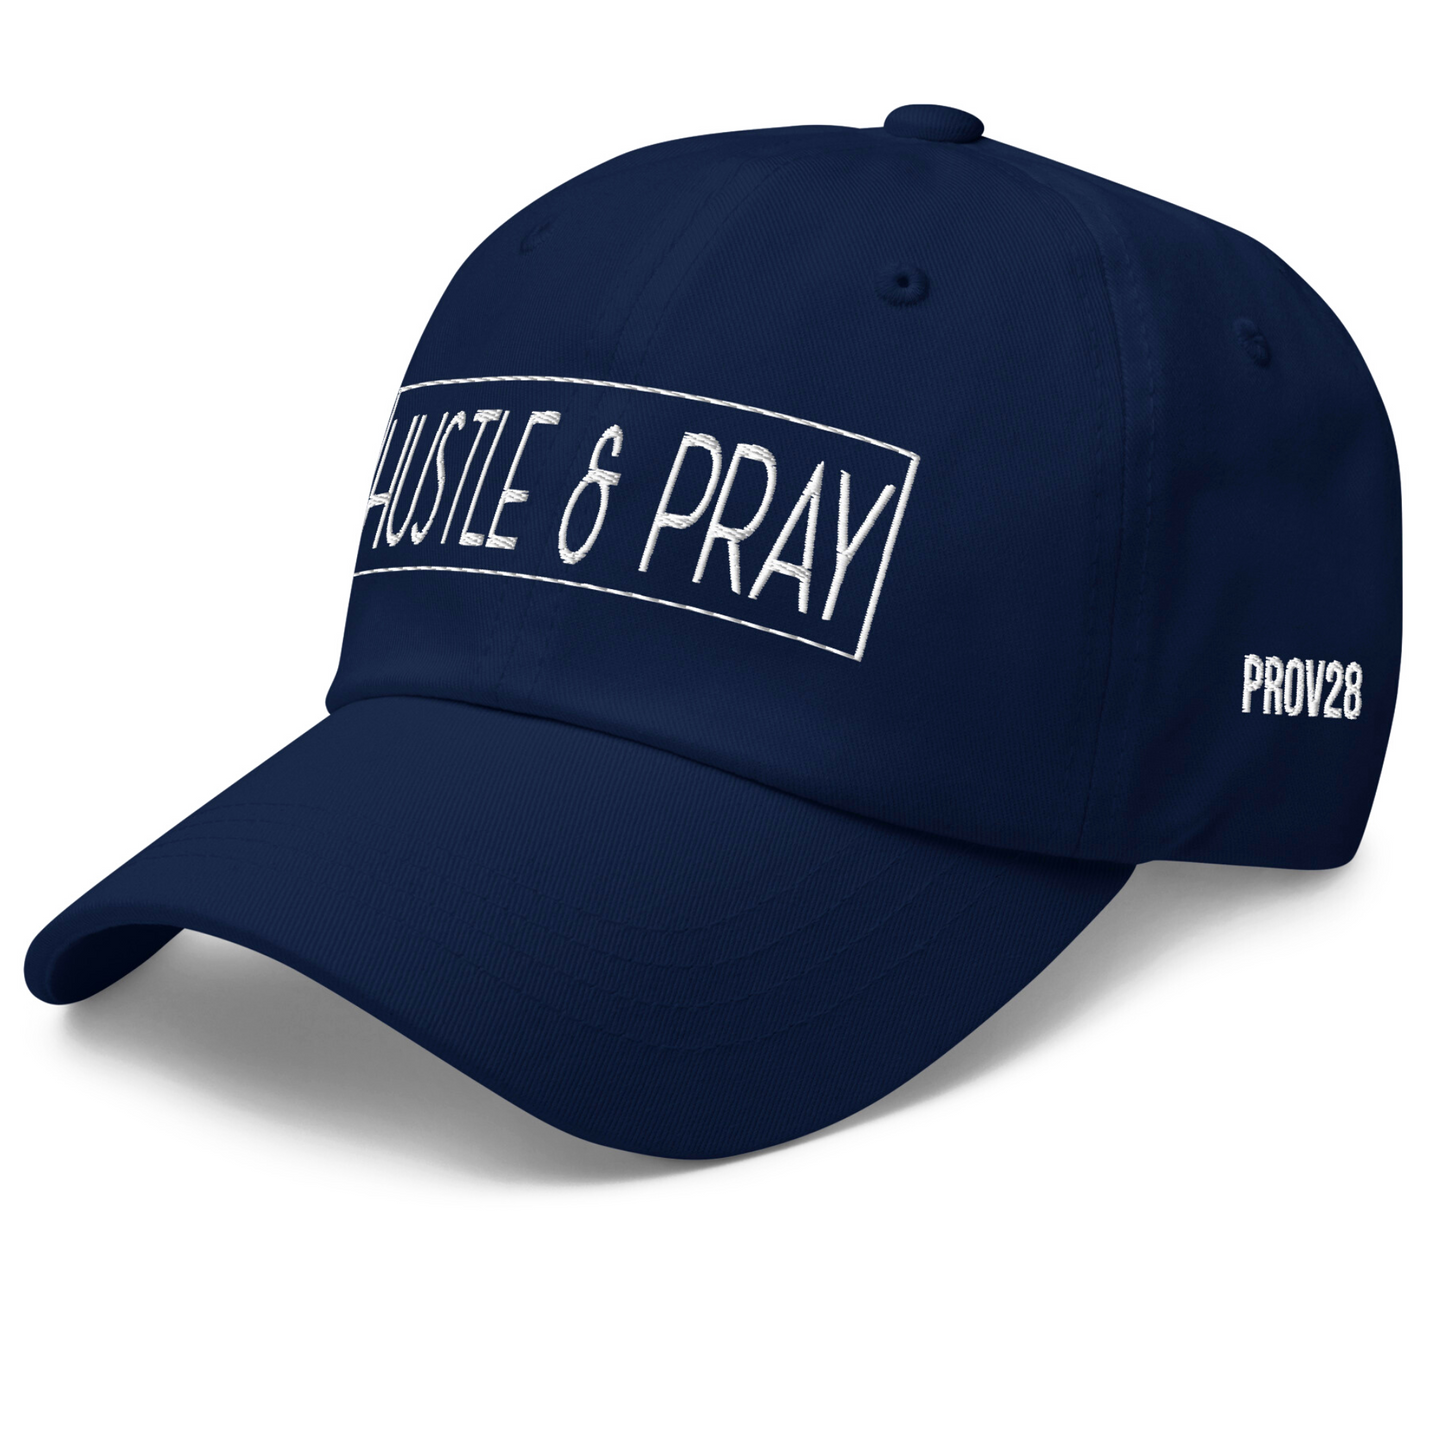 HUSTLE & PRAY - Navy & White Embroidered Dad Hat